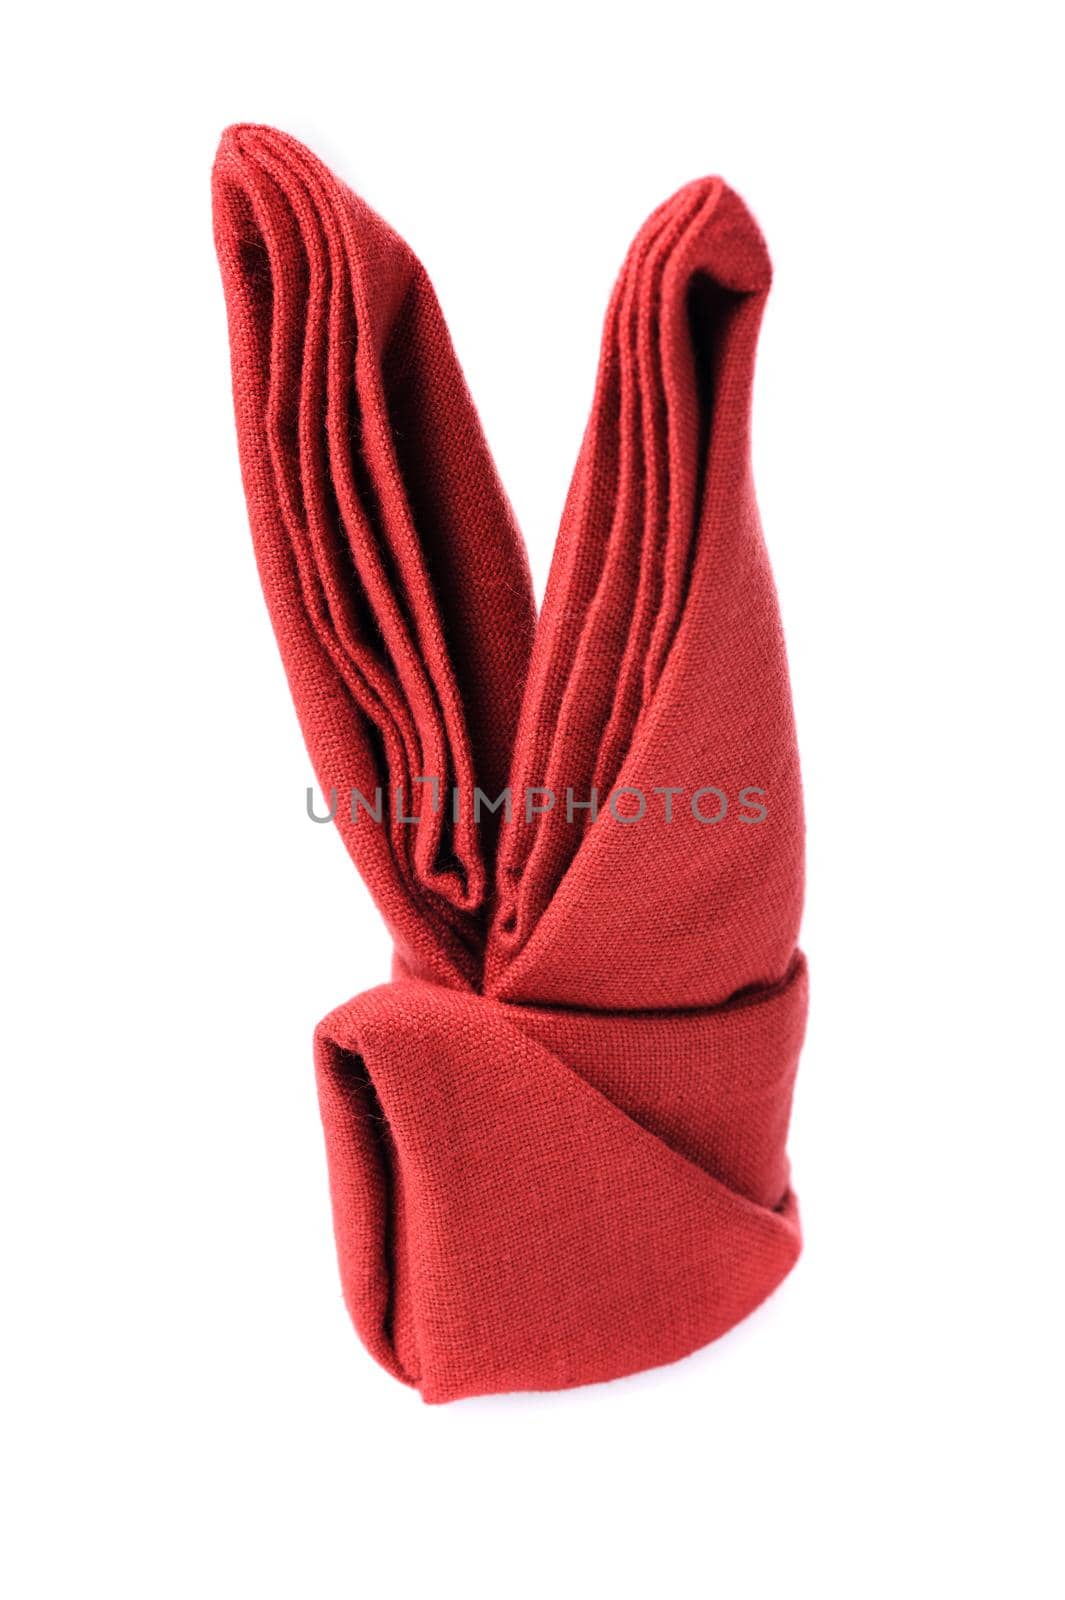 isolated folded red napkin over white background